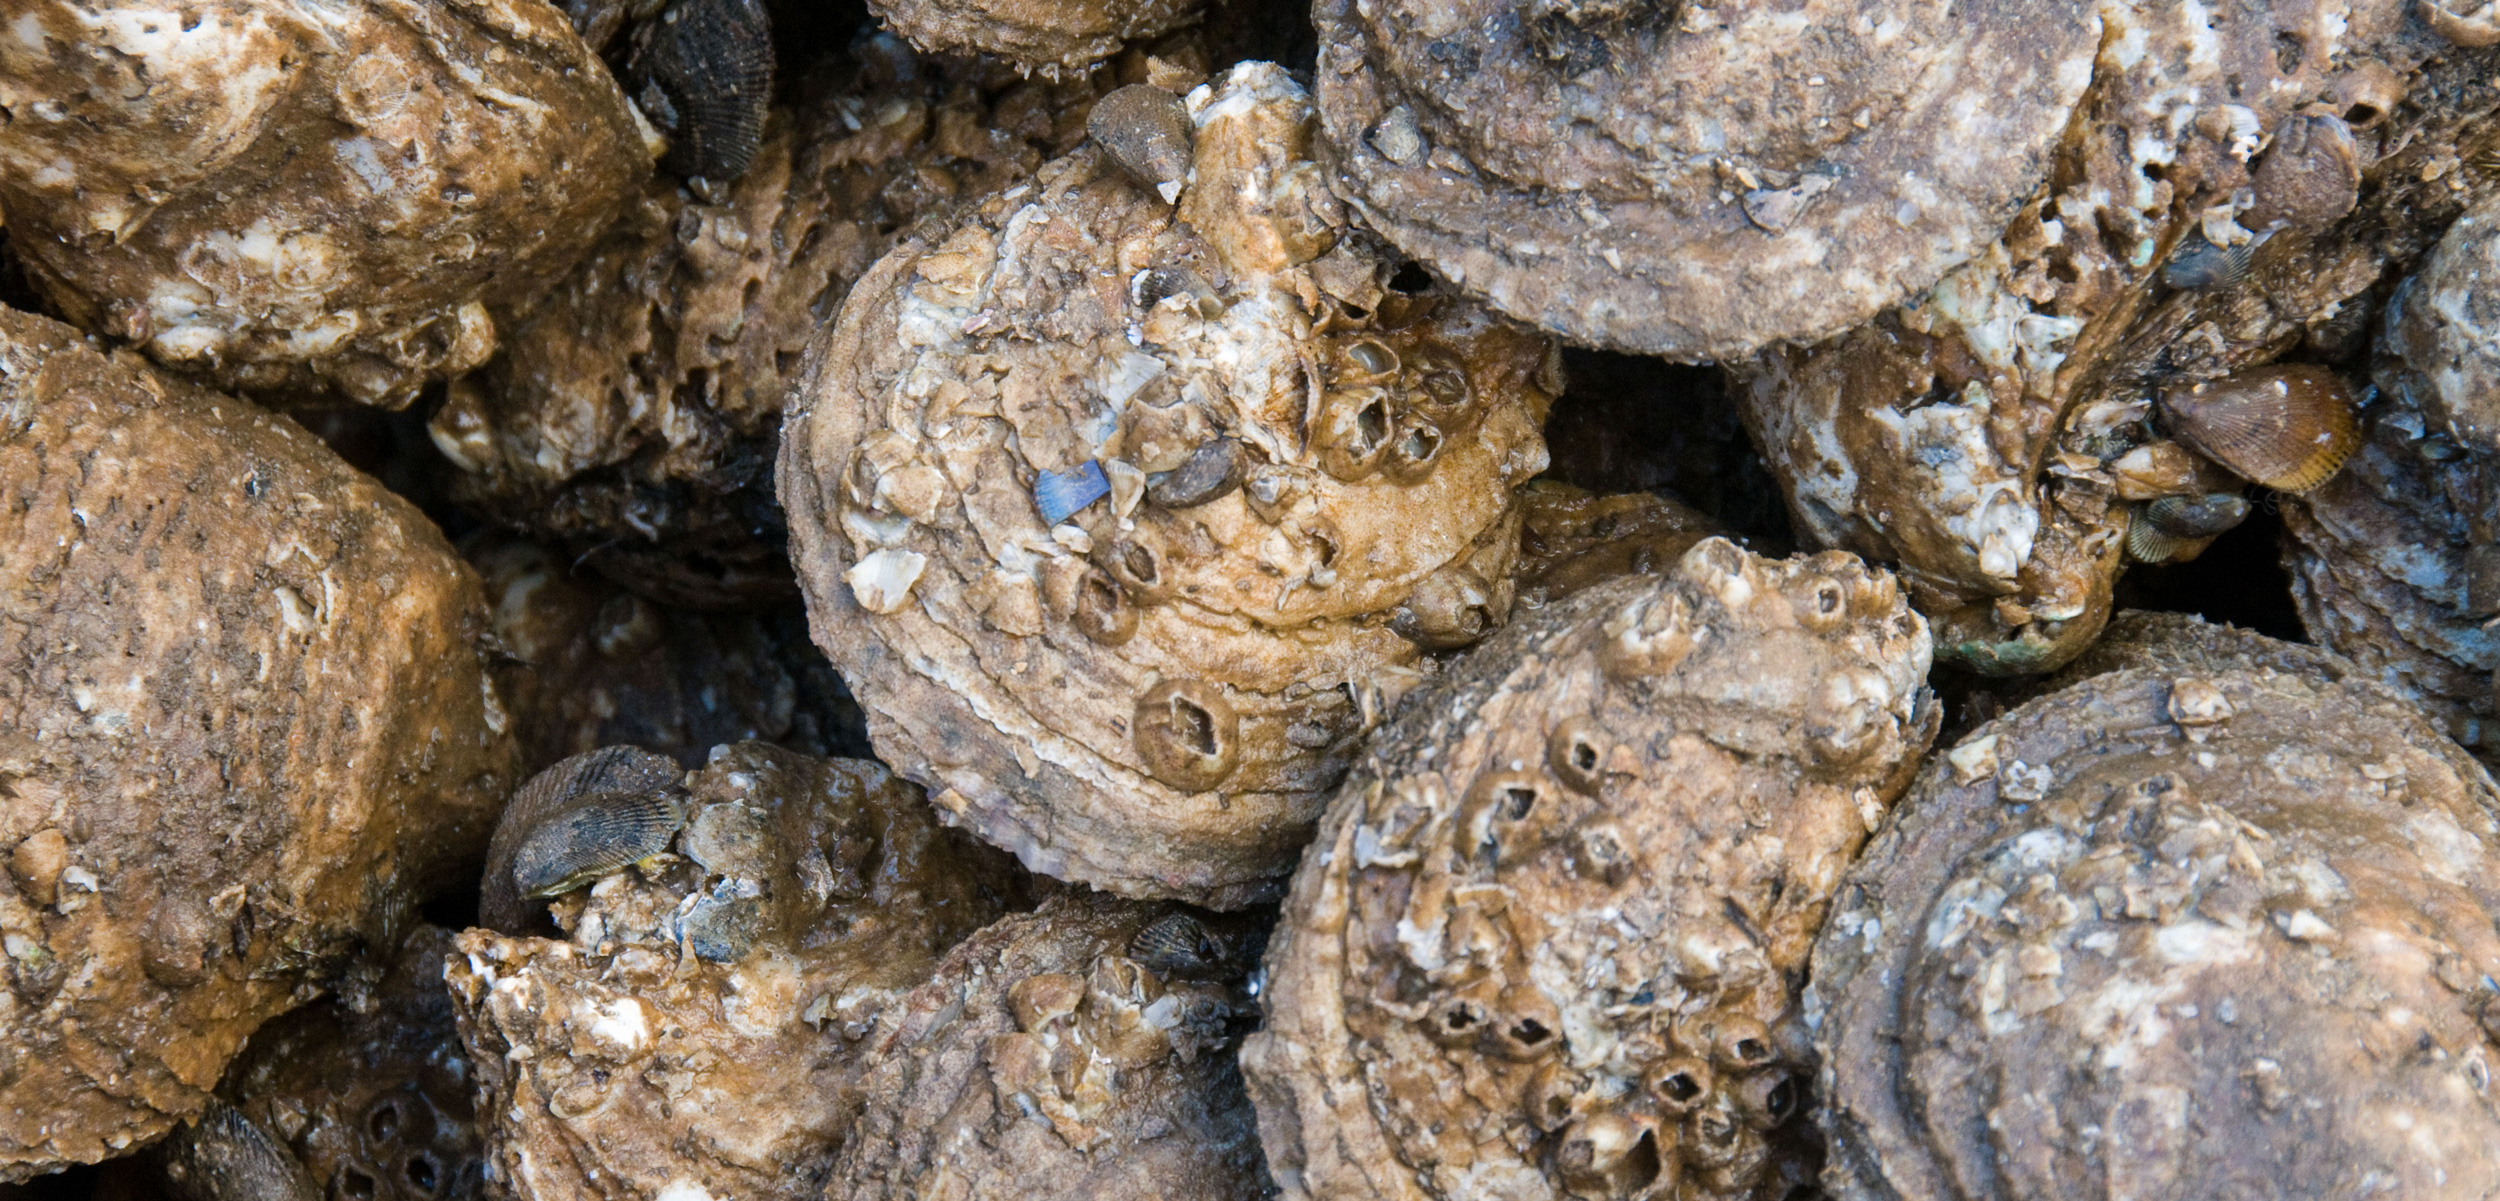 Chesapeake bay oysters